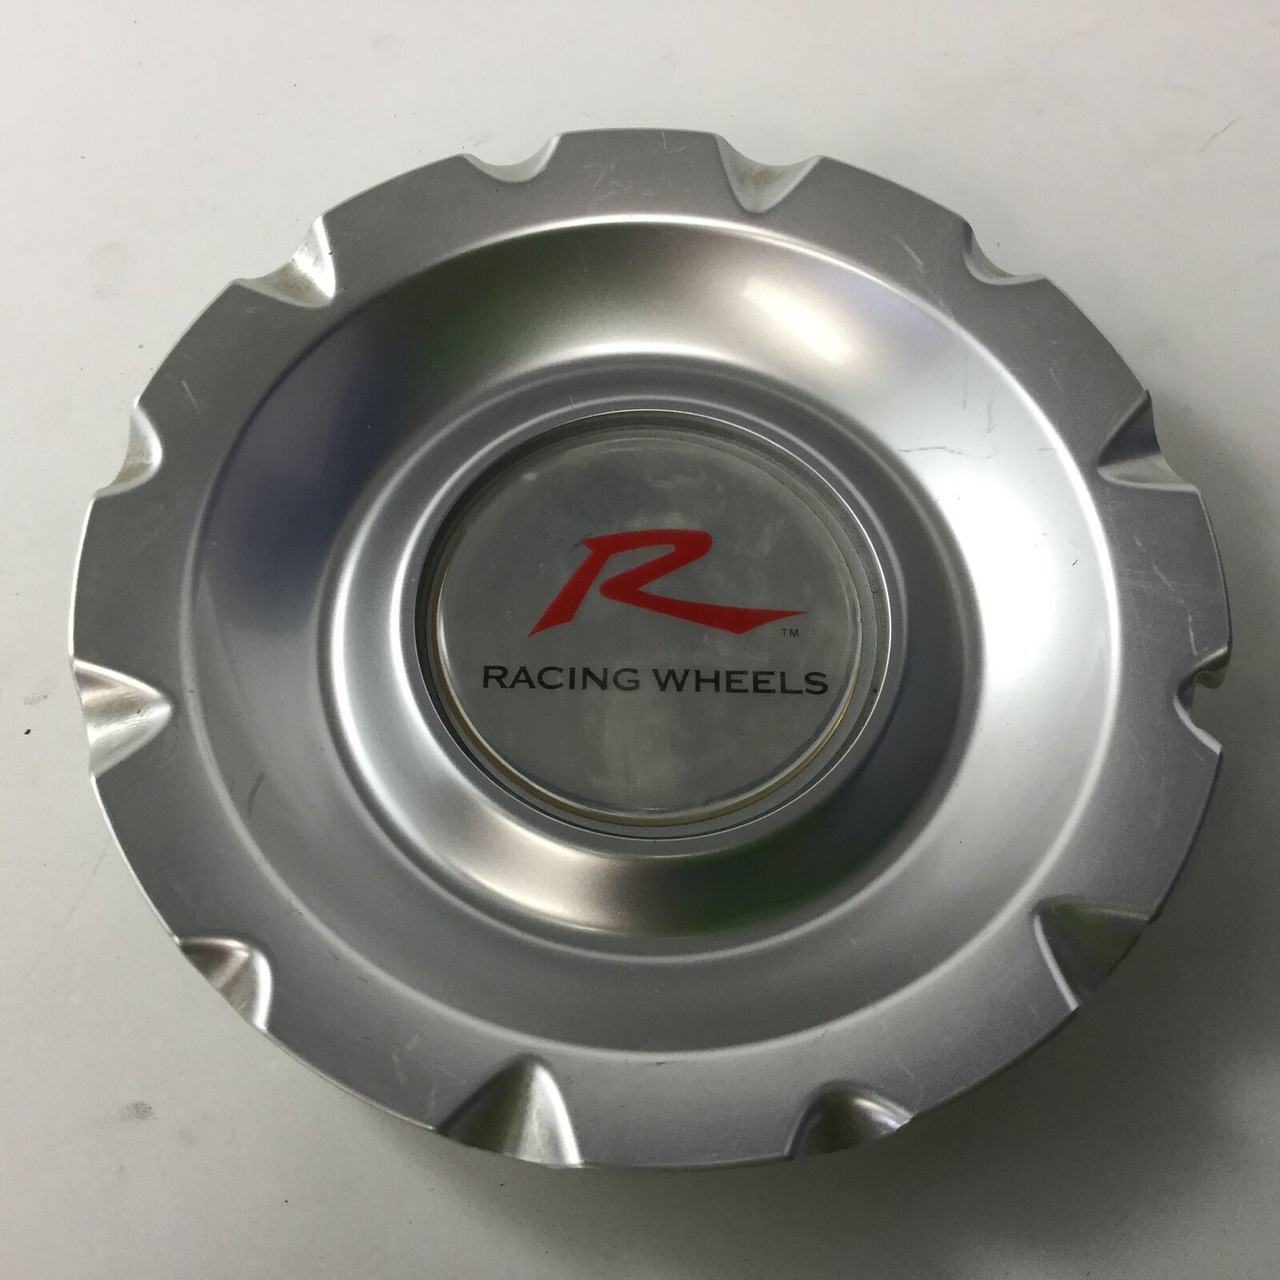 R Racing Wheels Aftermarket Silver Wheel Center Hub Cap C-619 5.875"